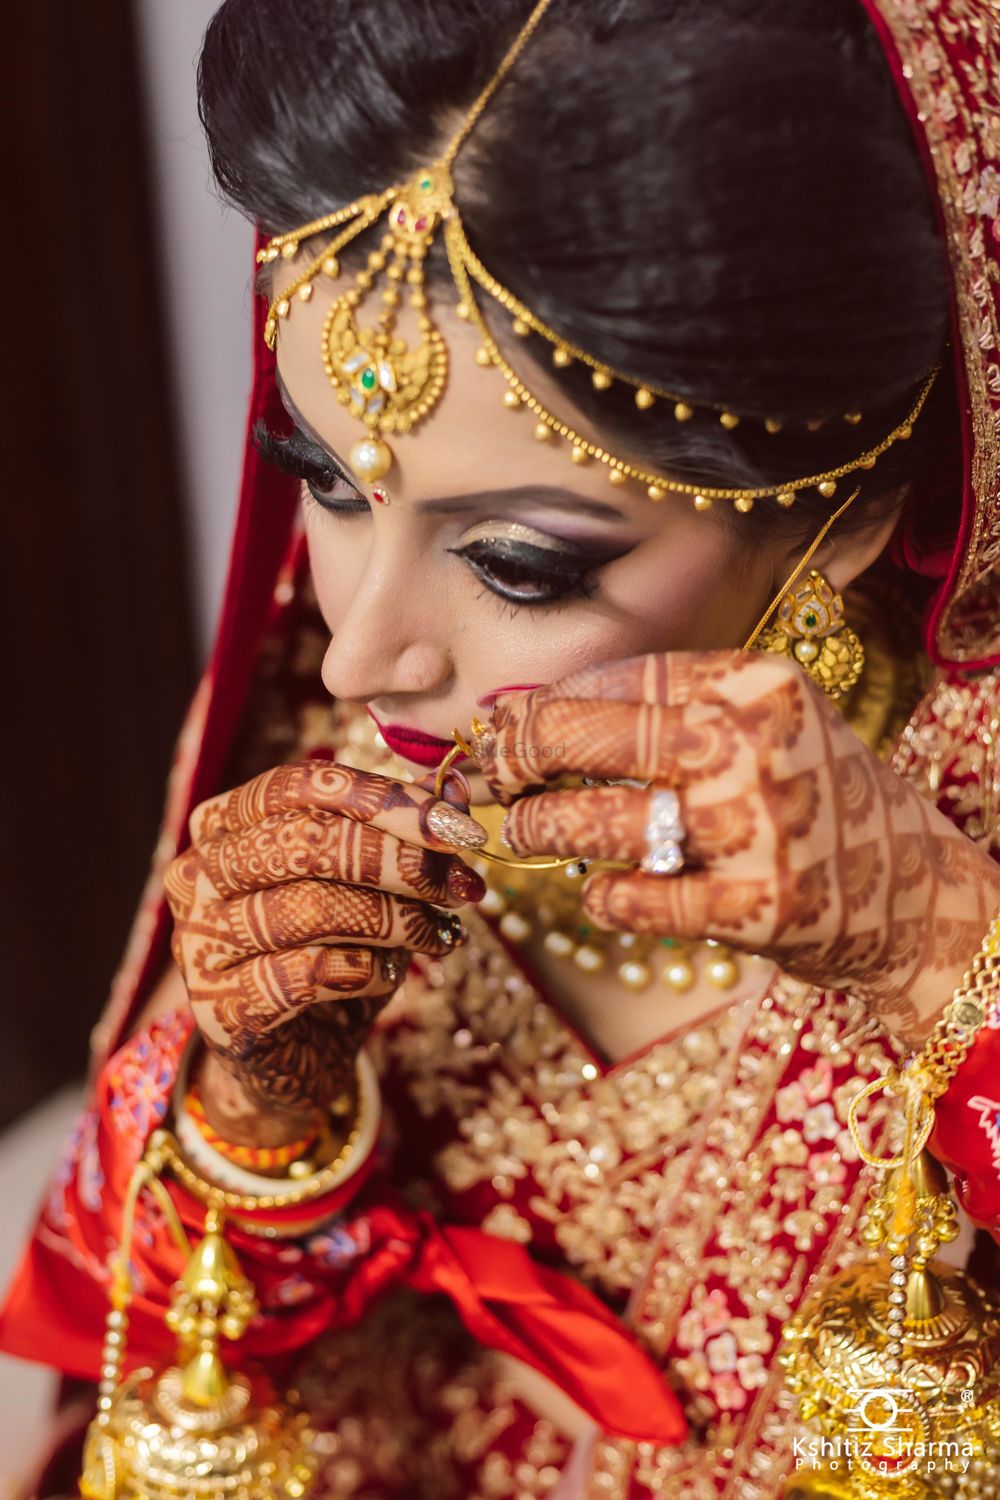 Photo From Wedding: Mehak & Anurag - By Kshitiz Sharma Photography